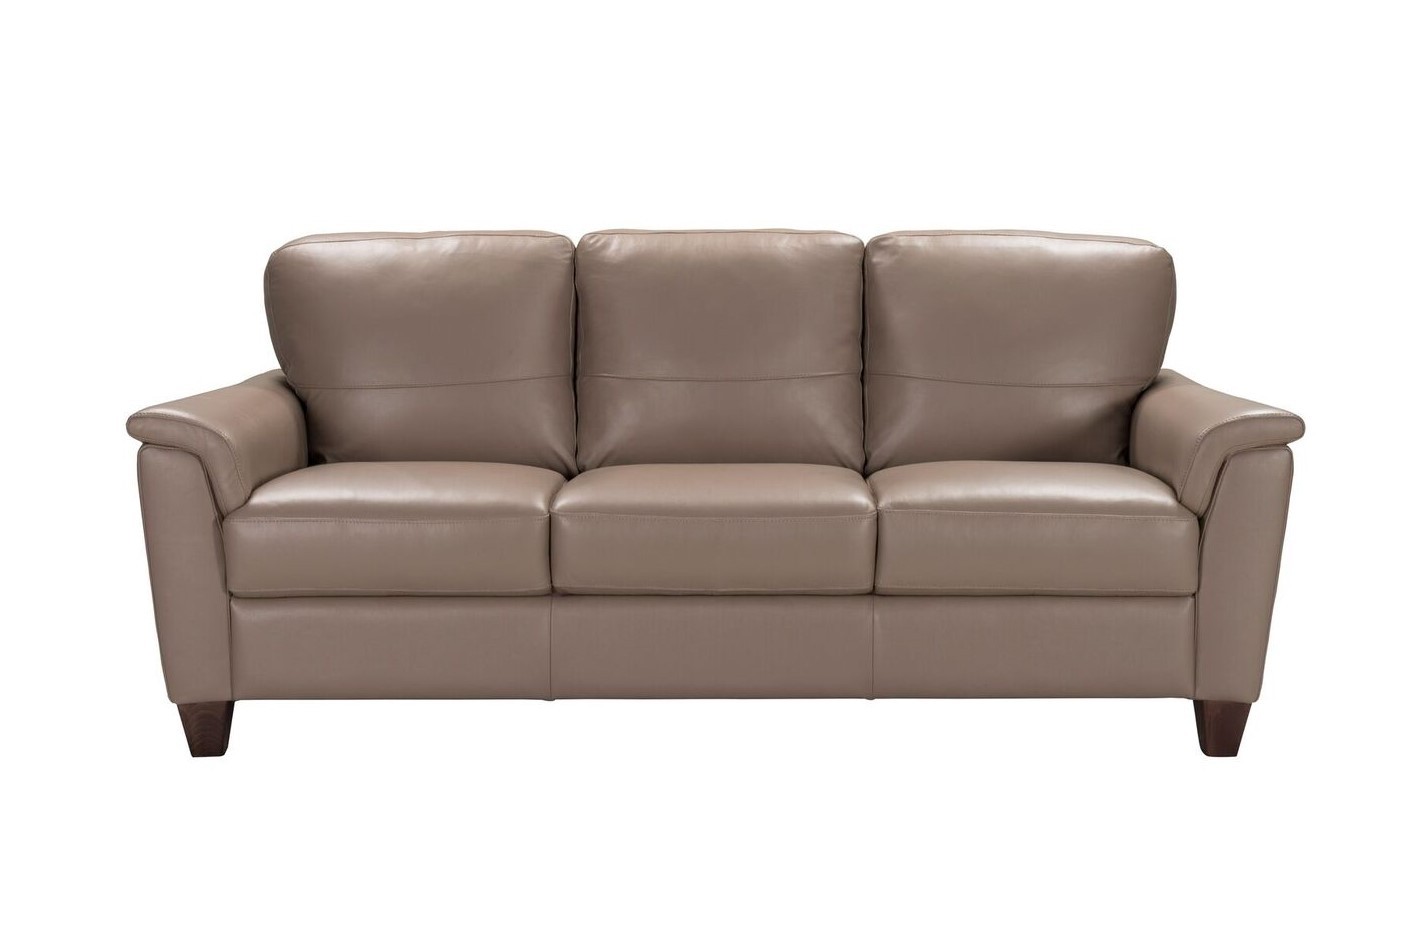 Rinaldo contemporary genuine italian leather lawson sofa